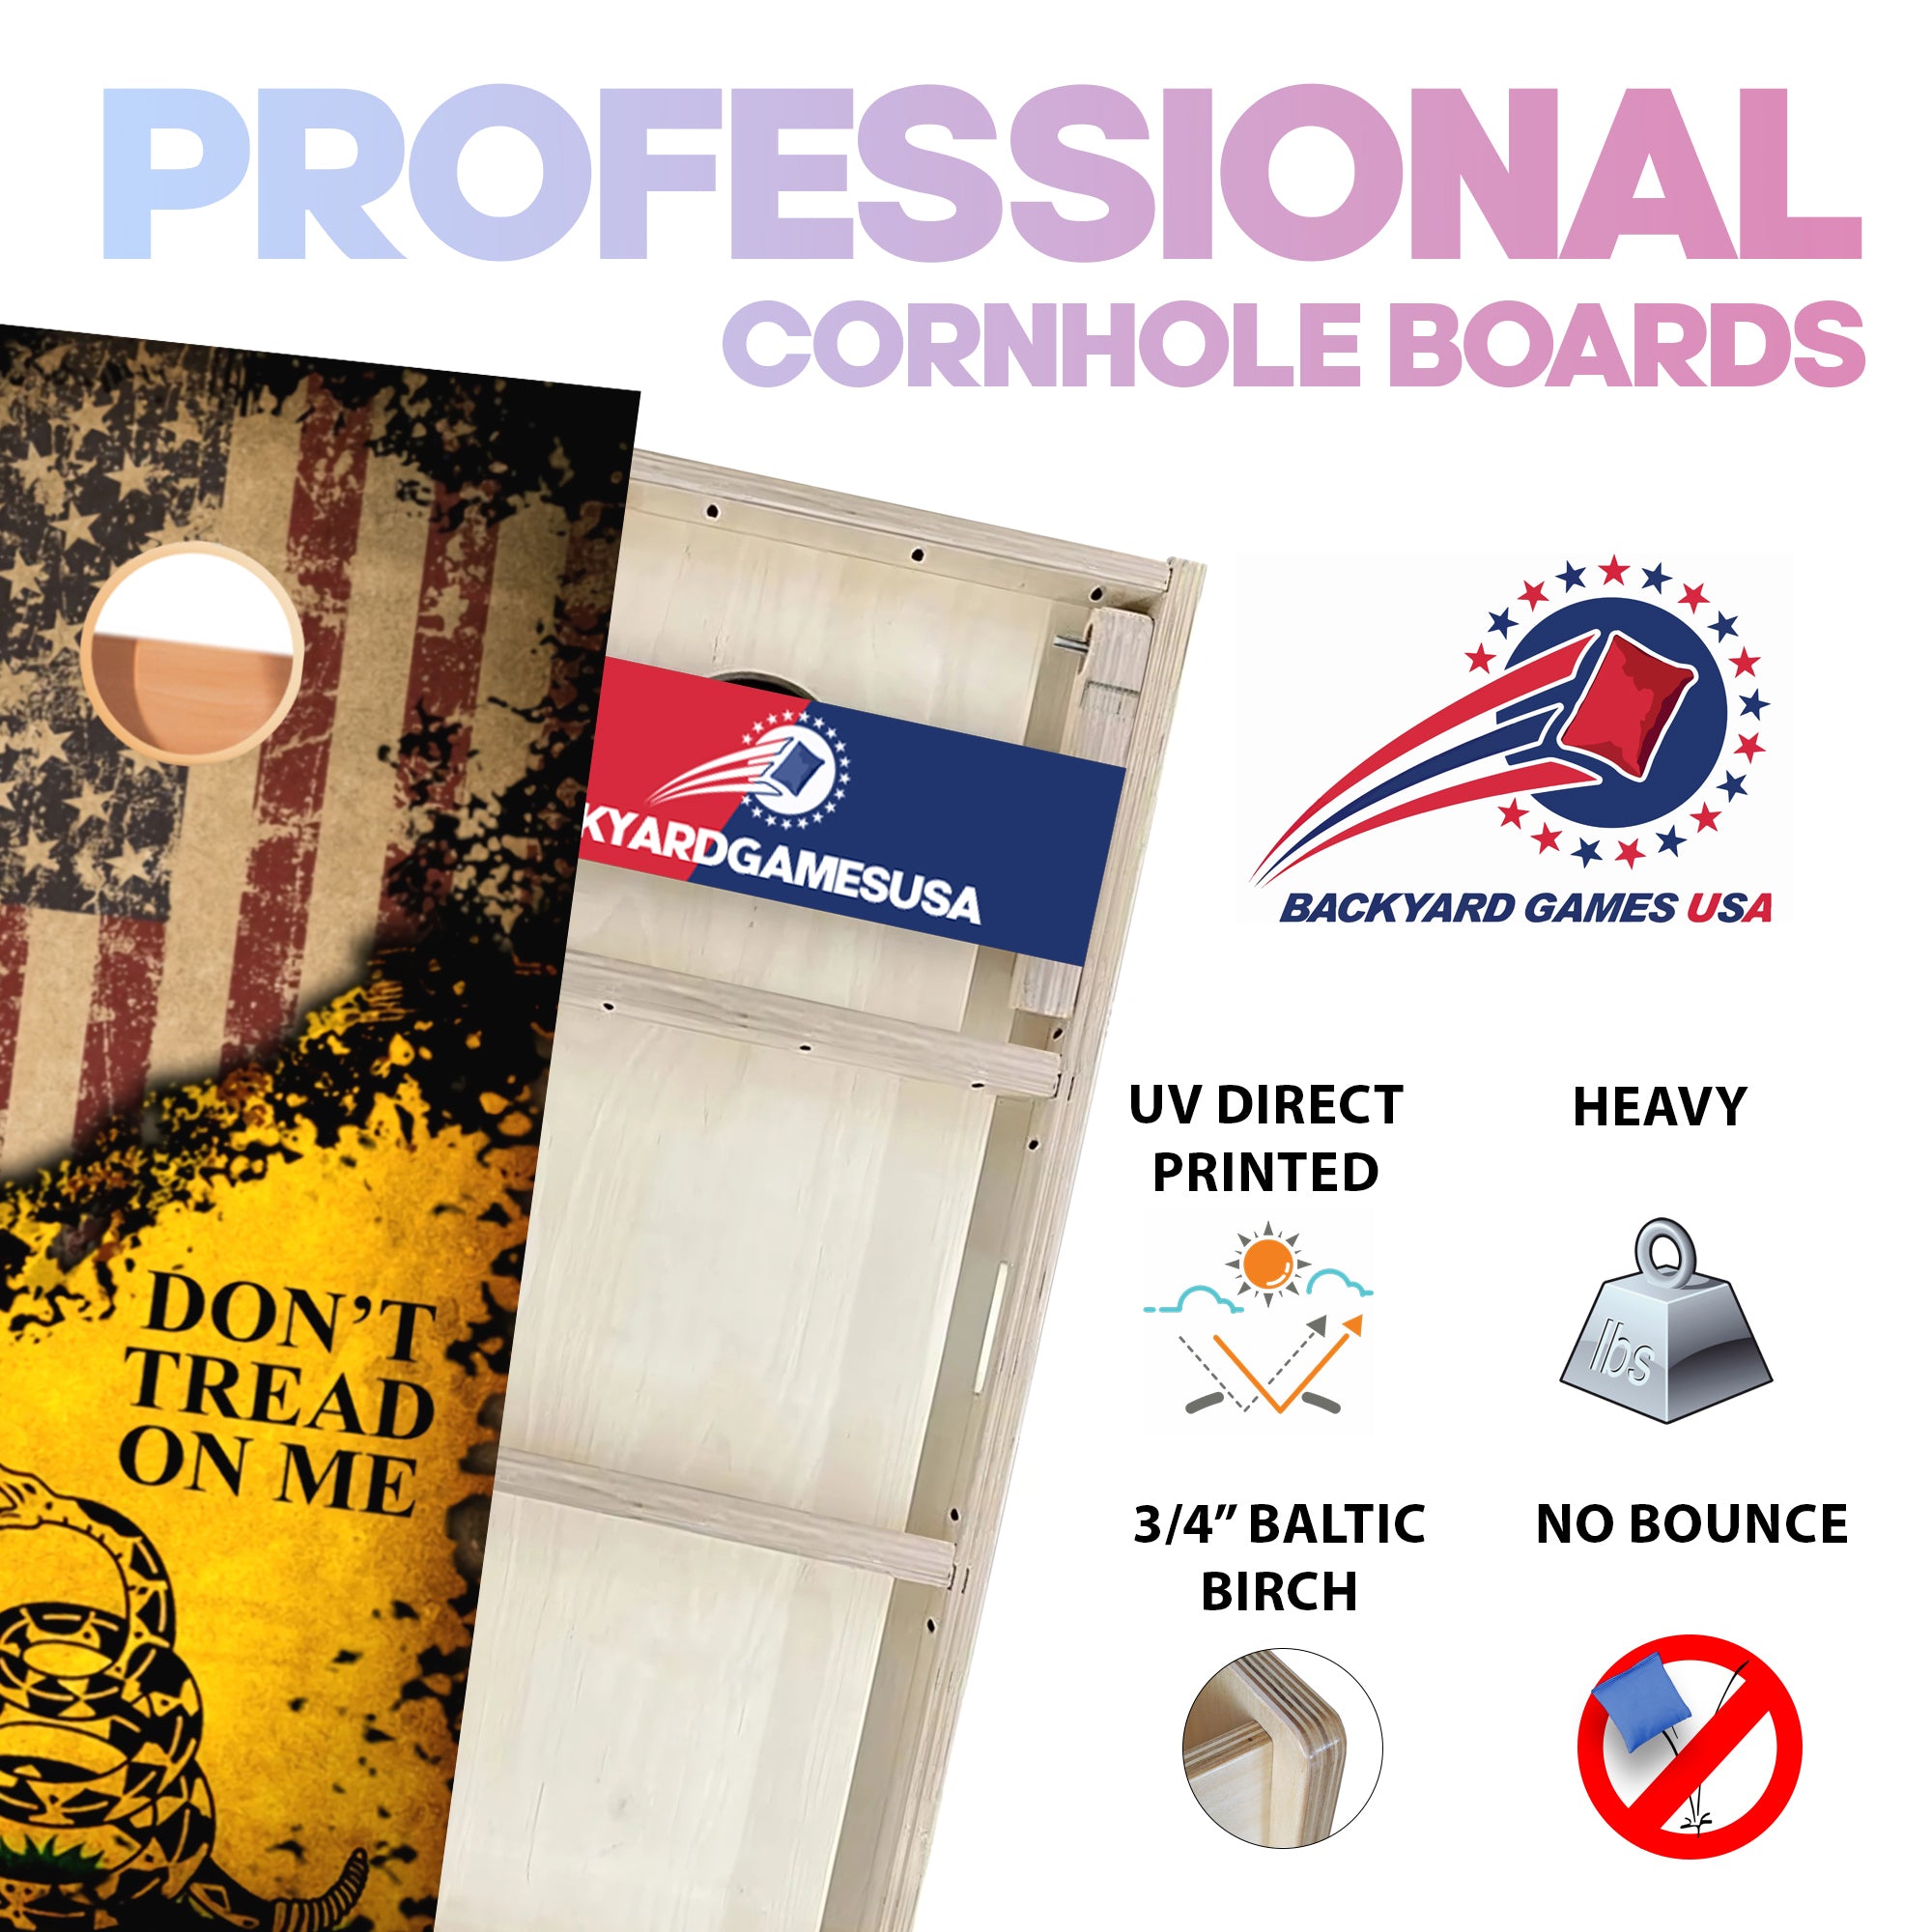 DON'T TREAD ON ME Professional Cornhole Boards